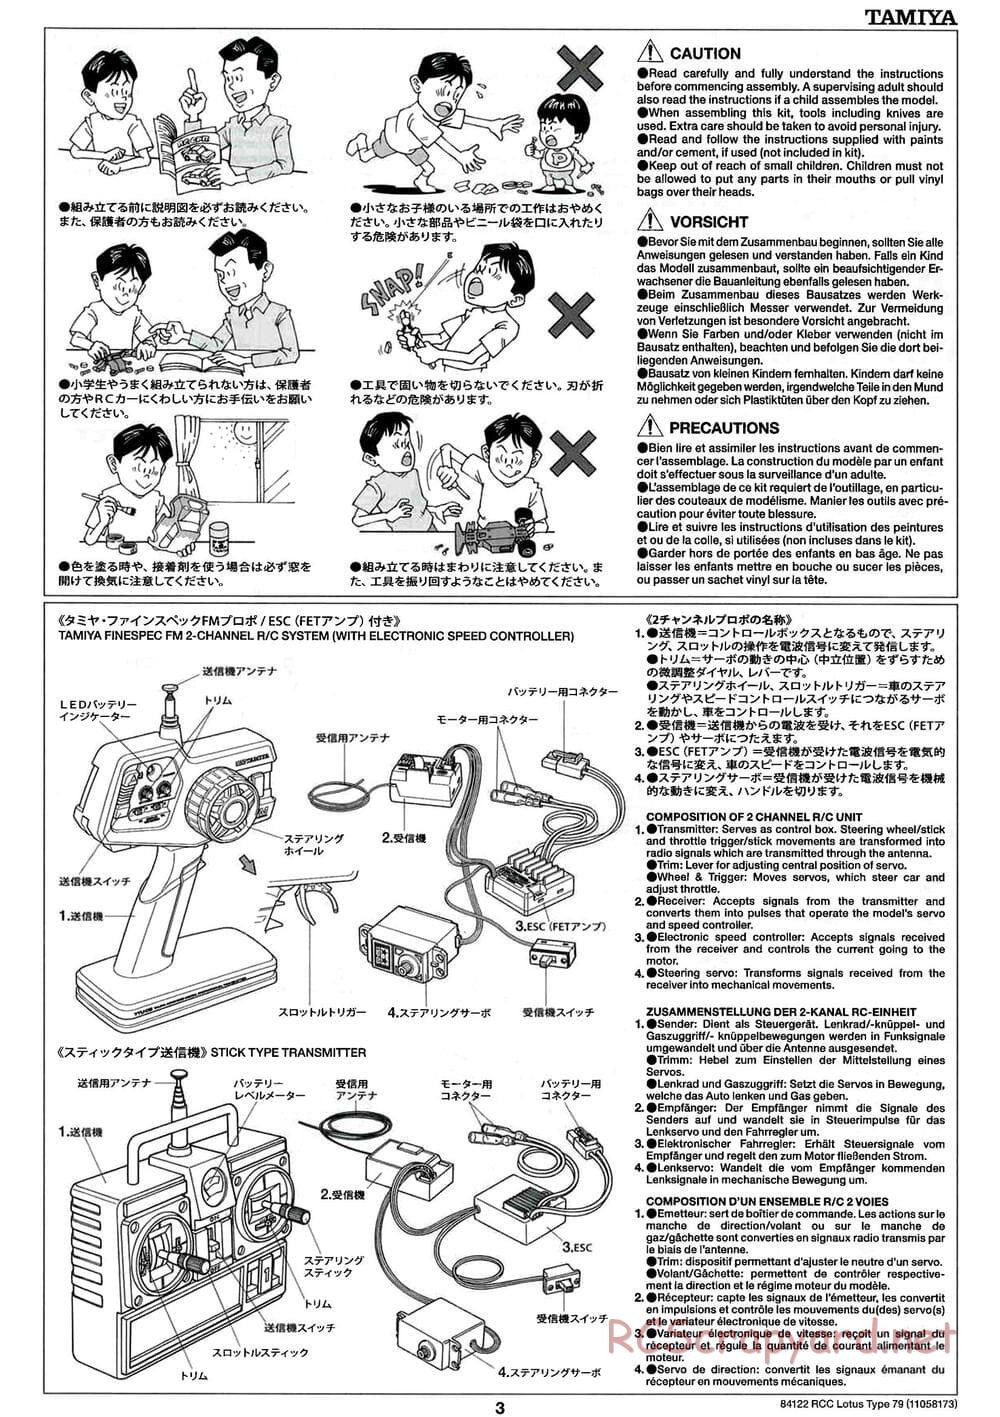 Tamiya - Lotus Type 79 - F104W Chassis - Manual - Page 3